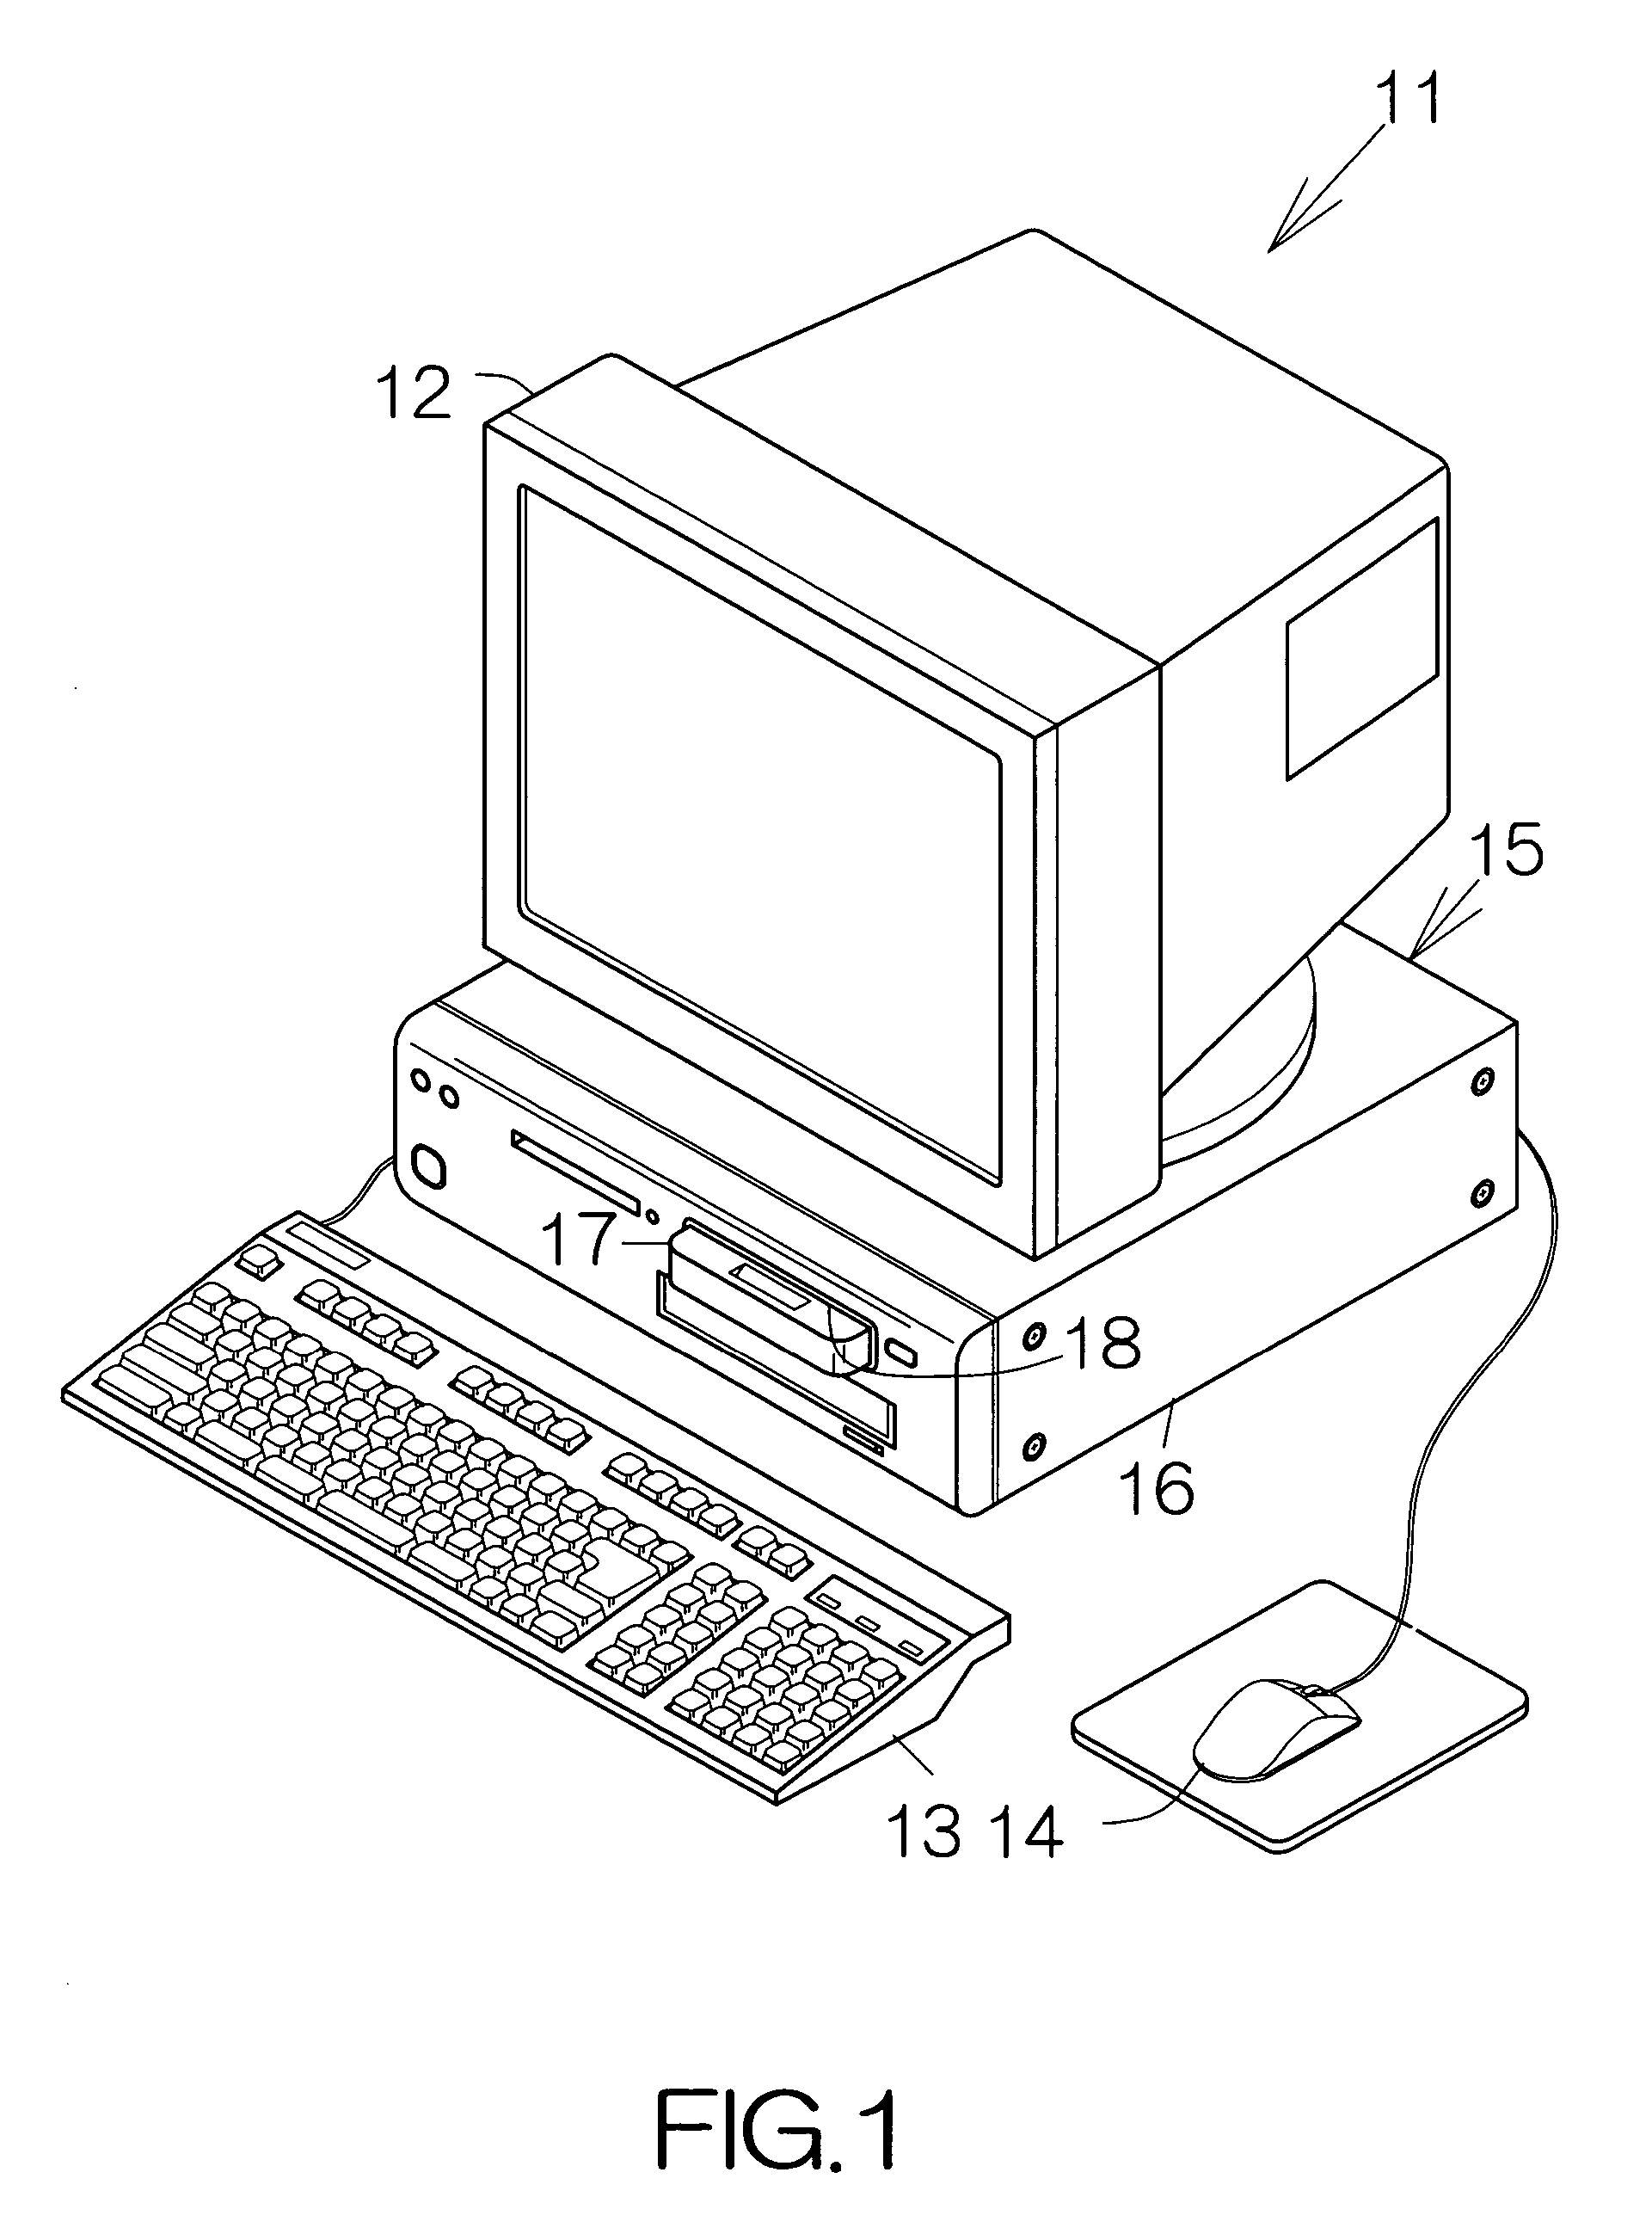 Removable storage device unit